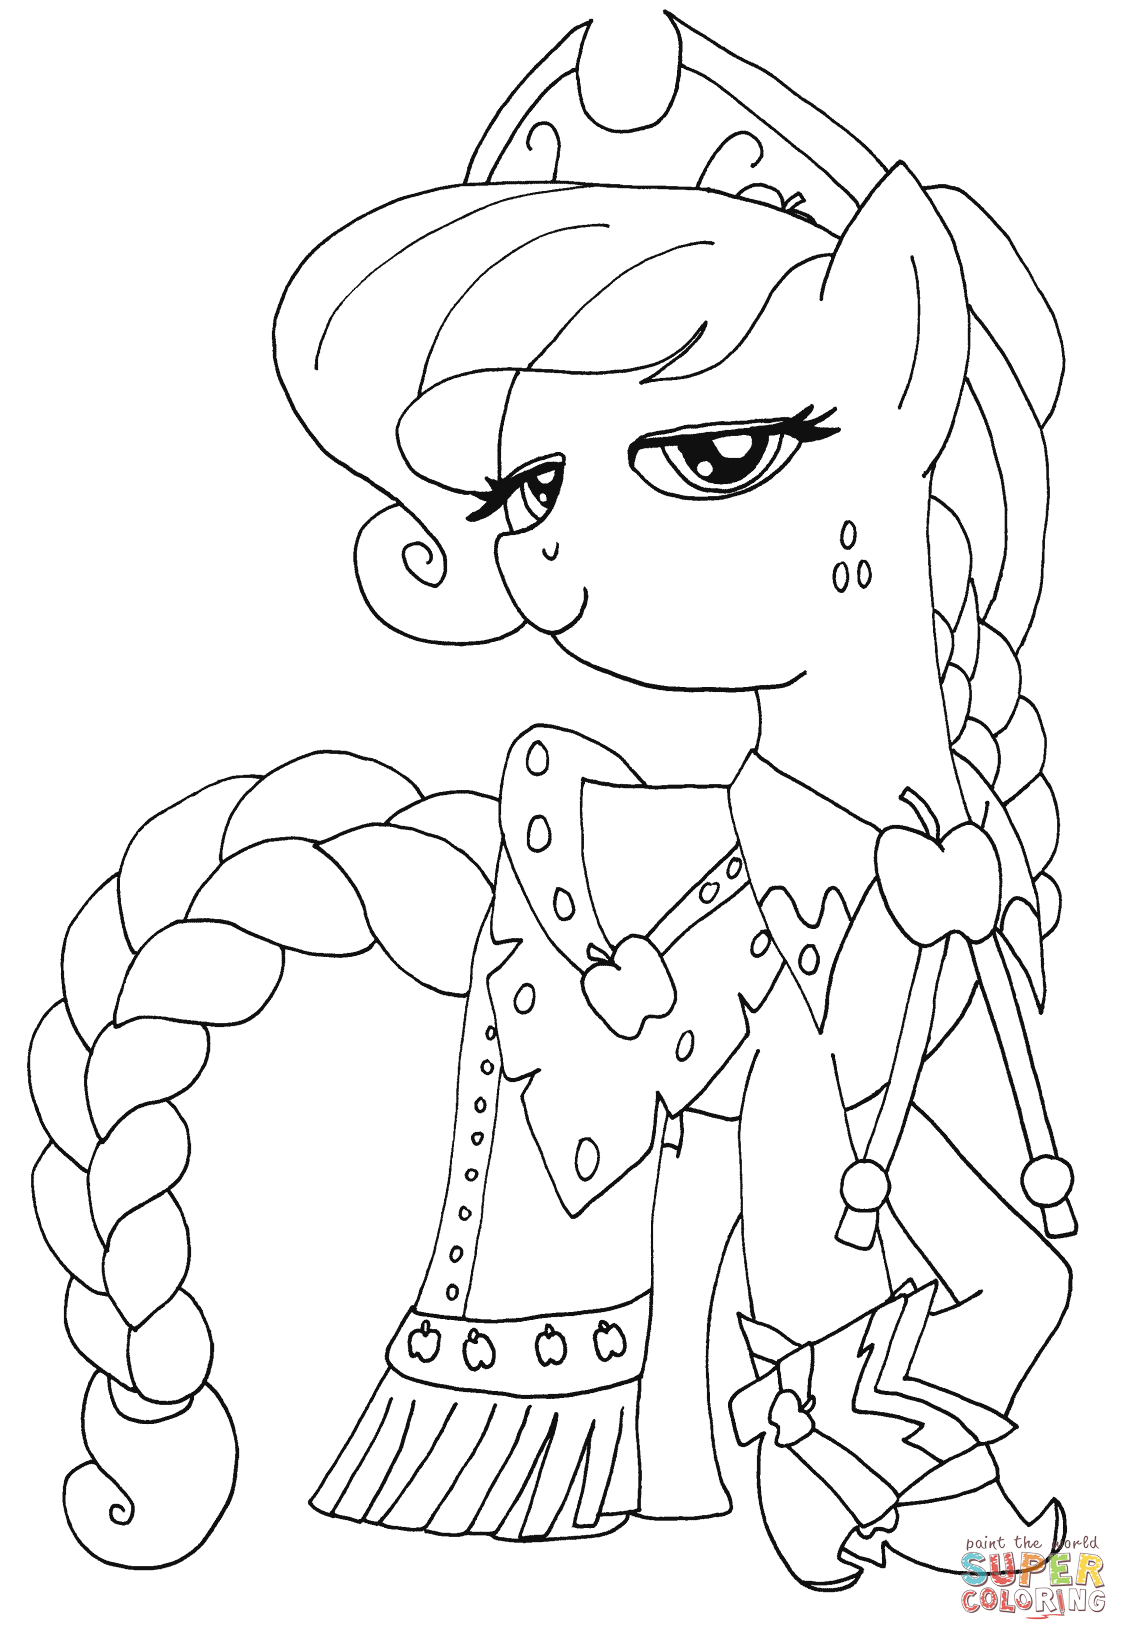 Princess Applejack from My Little Pony